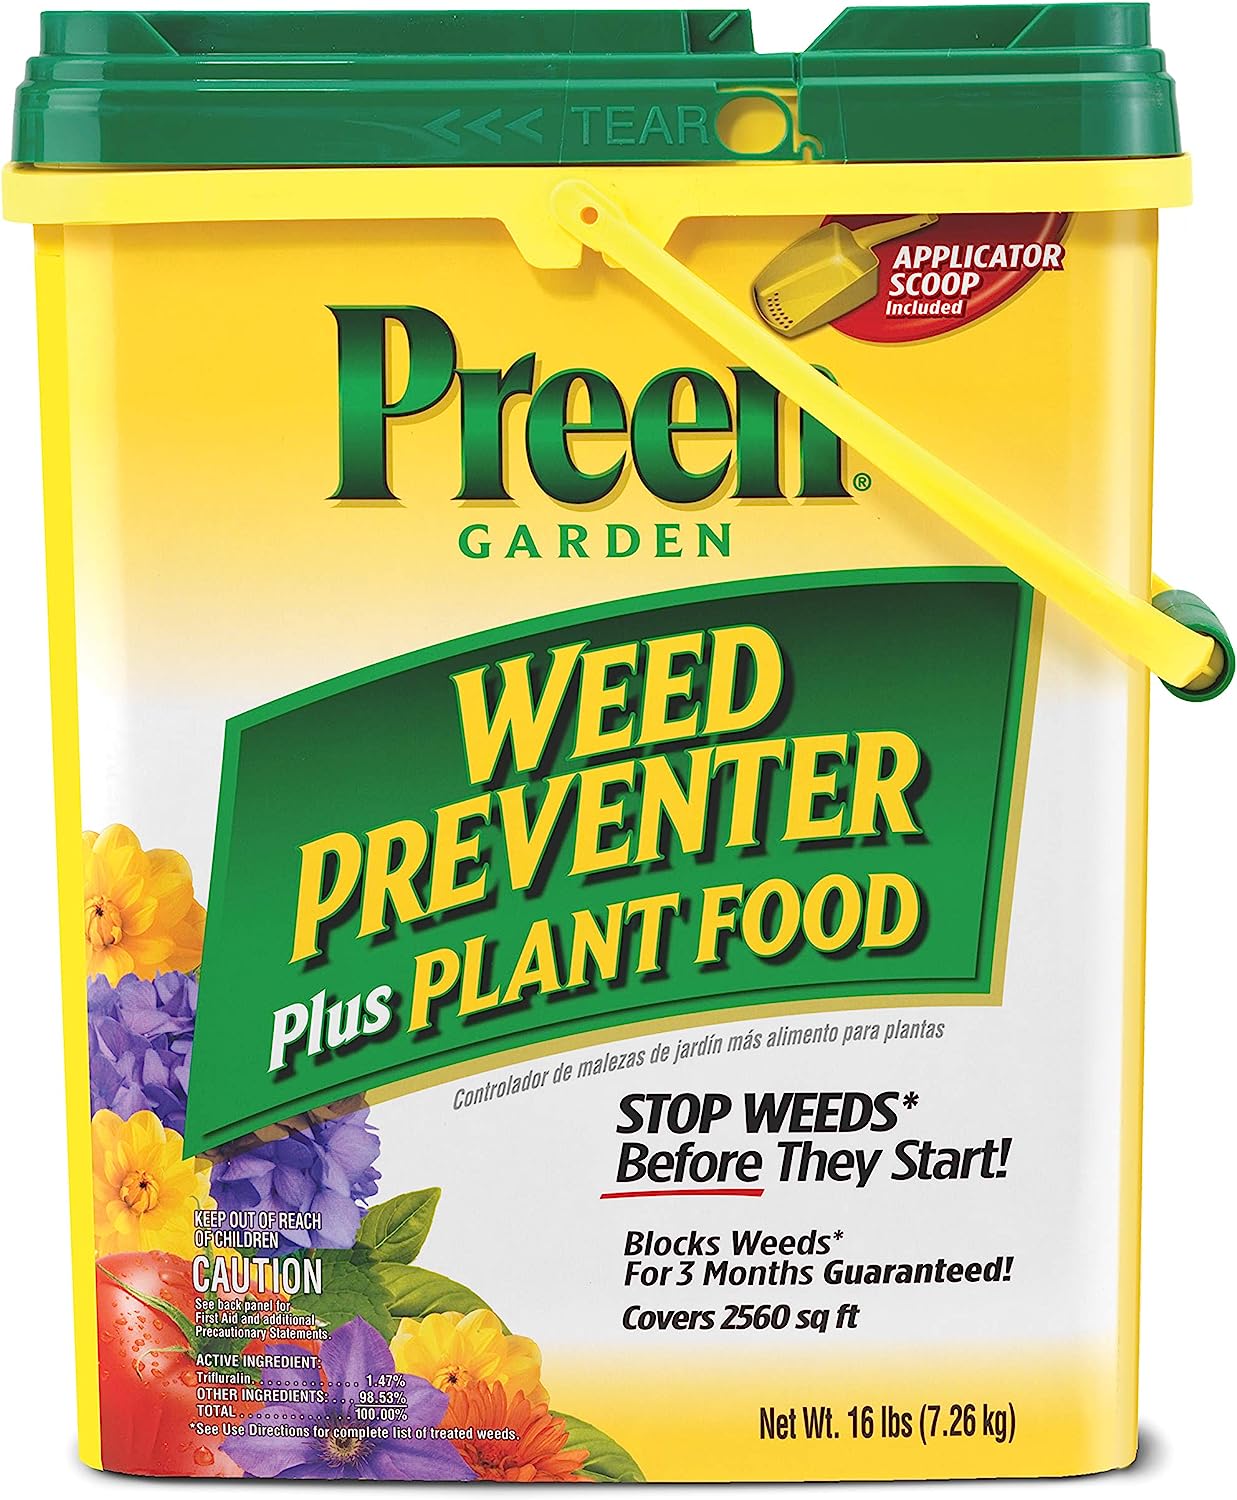 Preen Garden Weed Preventer Plus Plant Food - 16 lb. - [...]